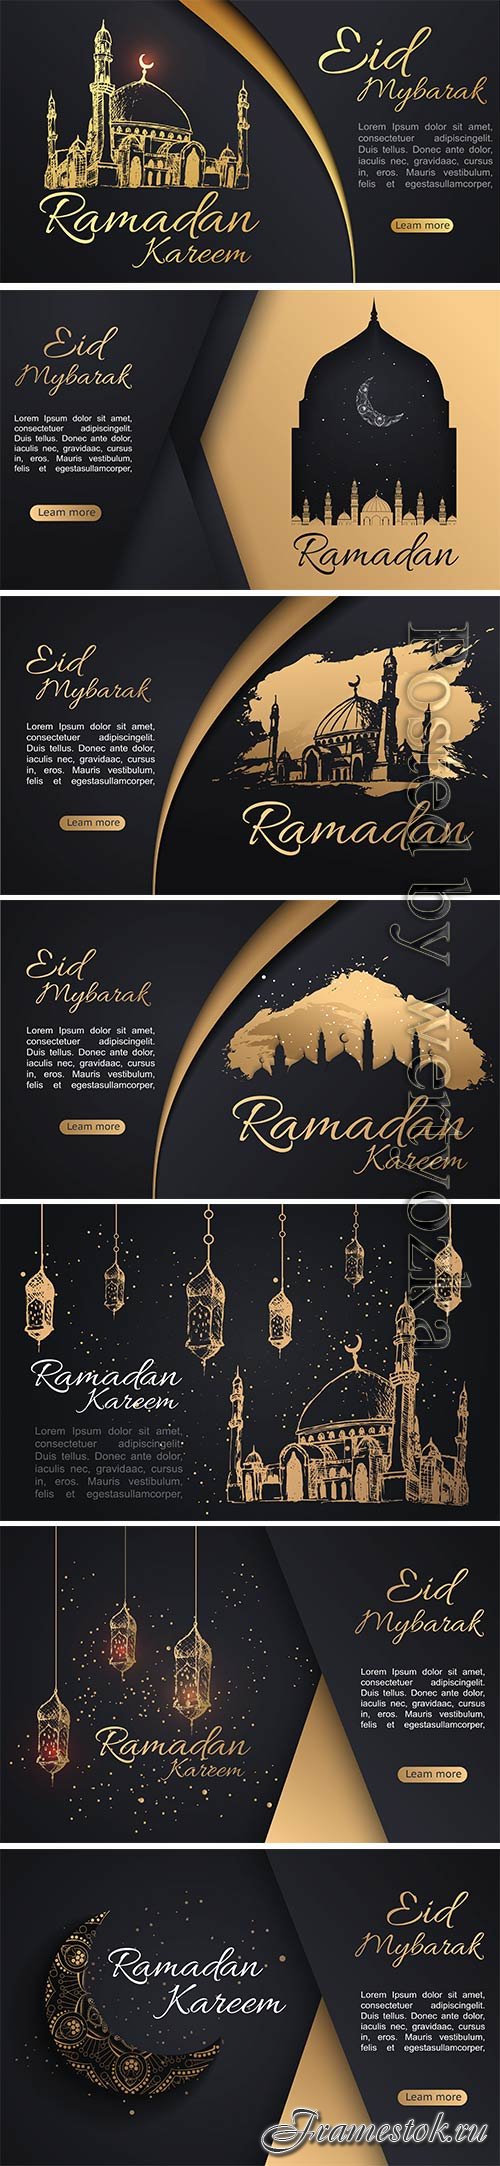 Ramadan Kareem islamic greeting watercolor sketch background